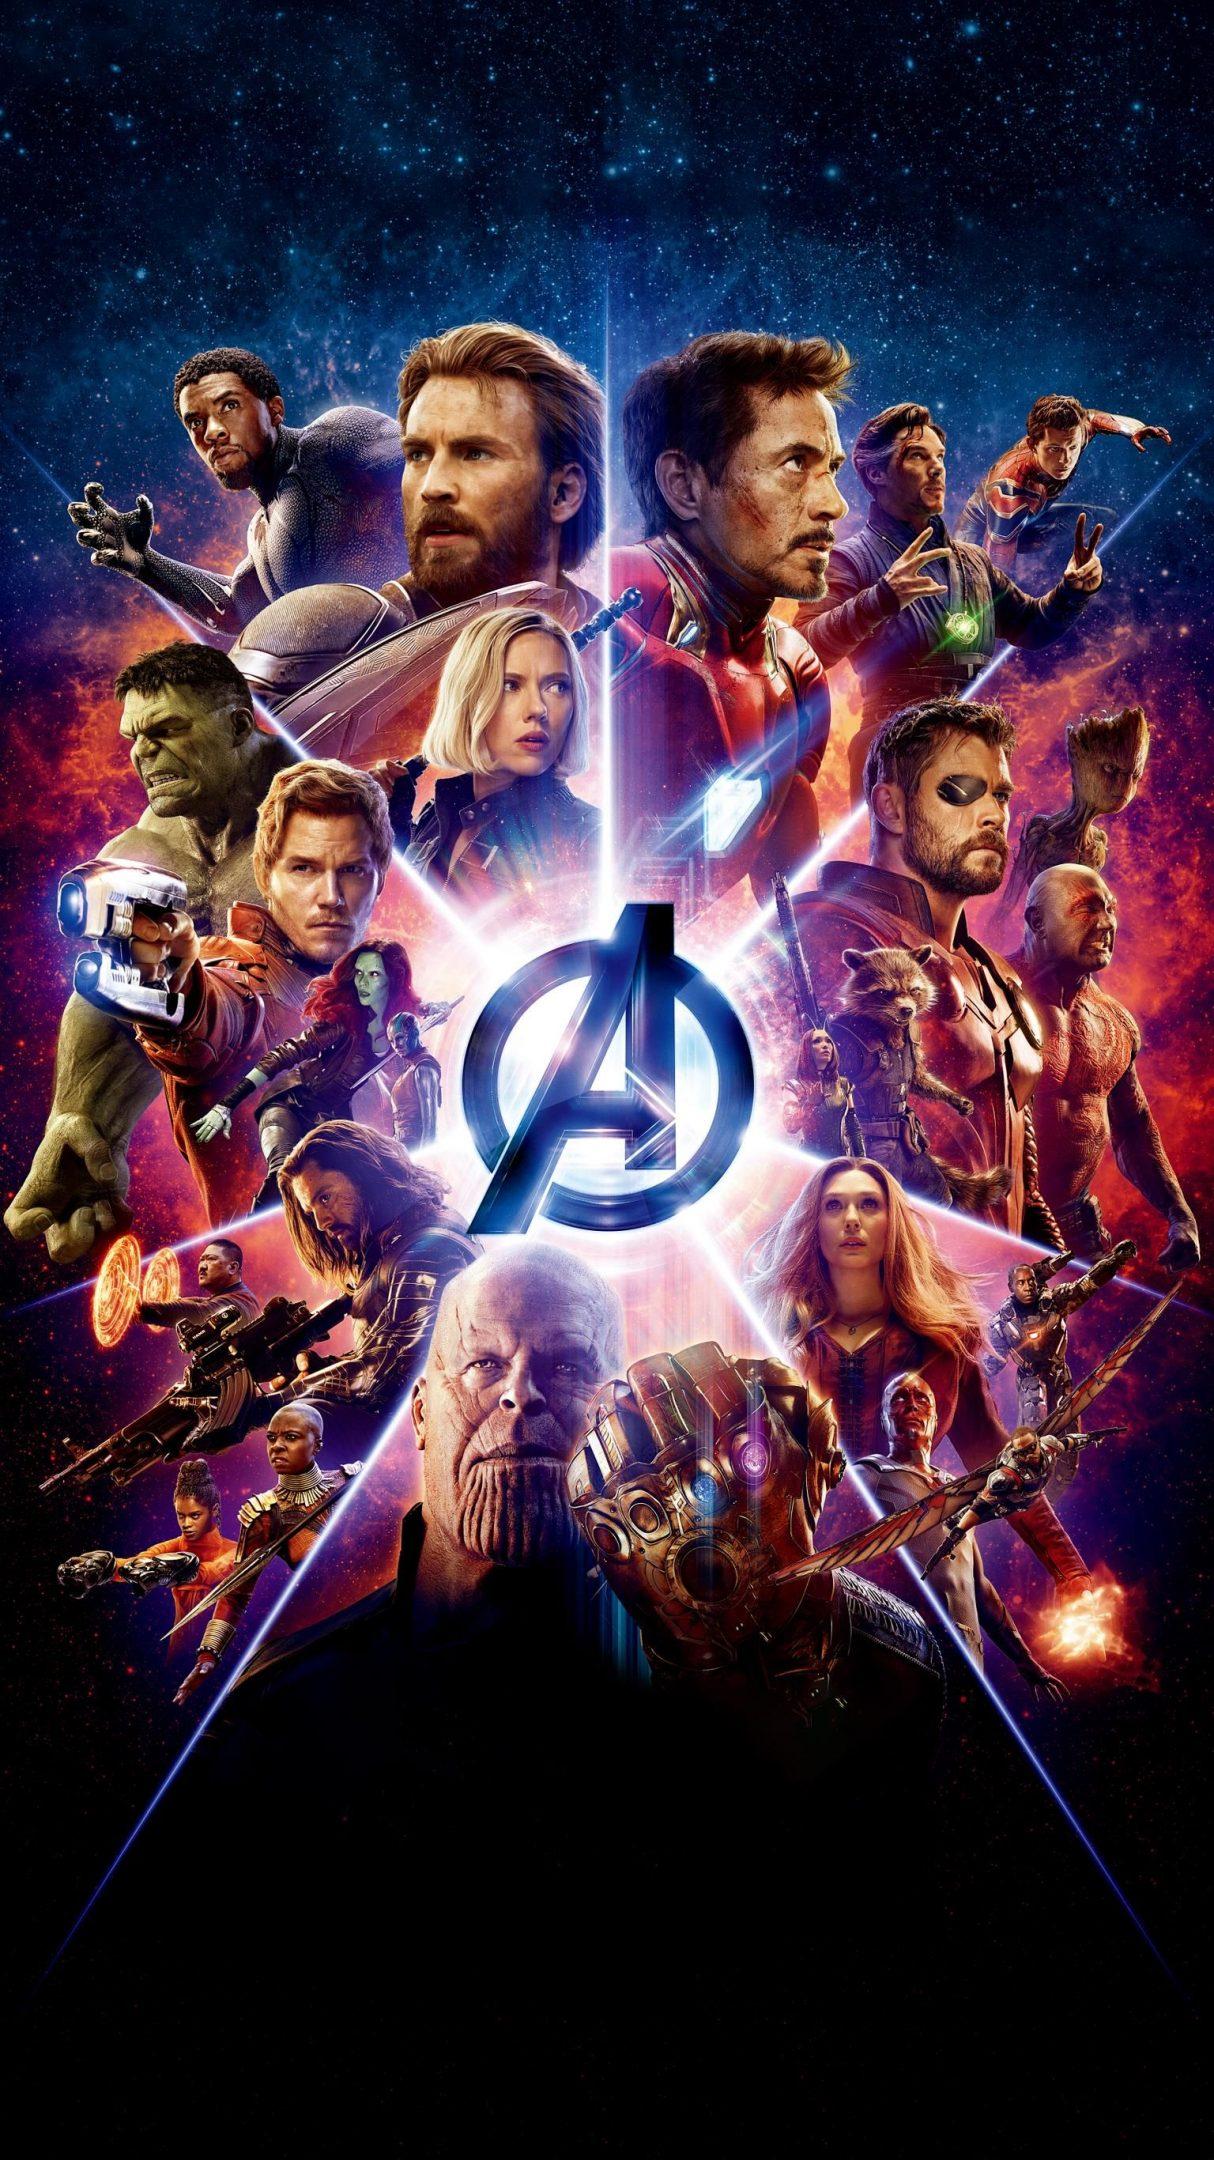 Free Download Avengers Endgame iPhone Wallpaper